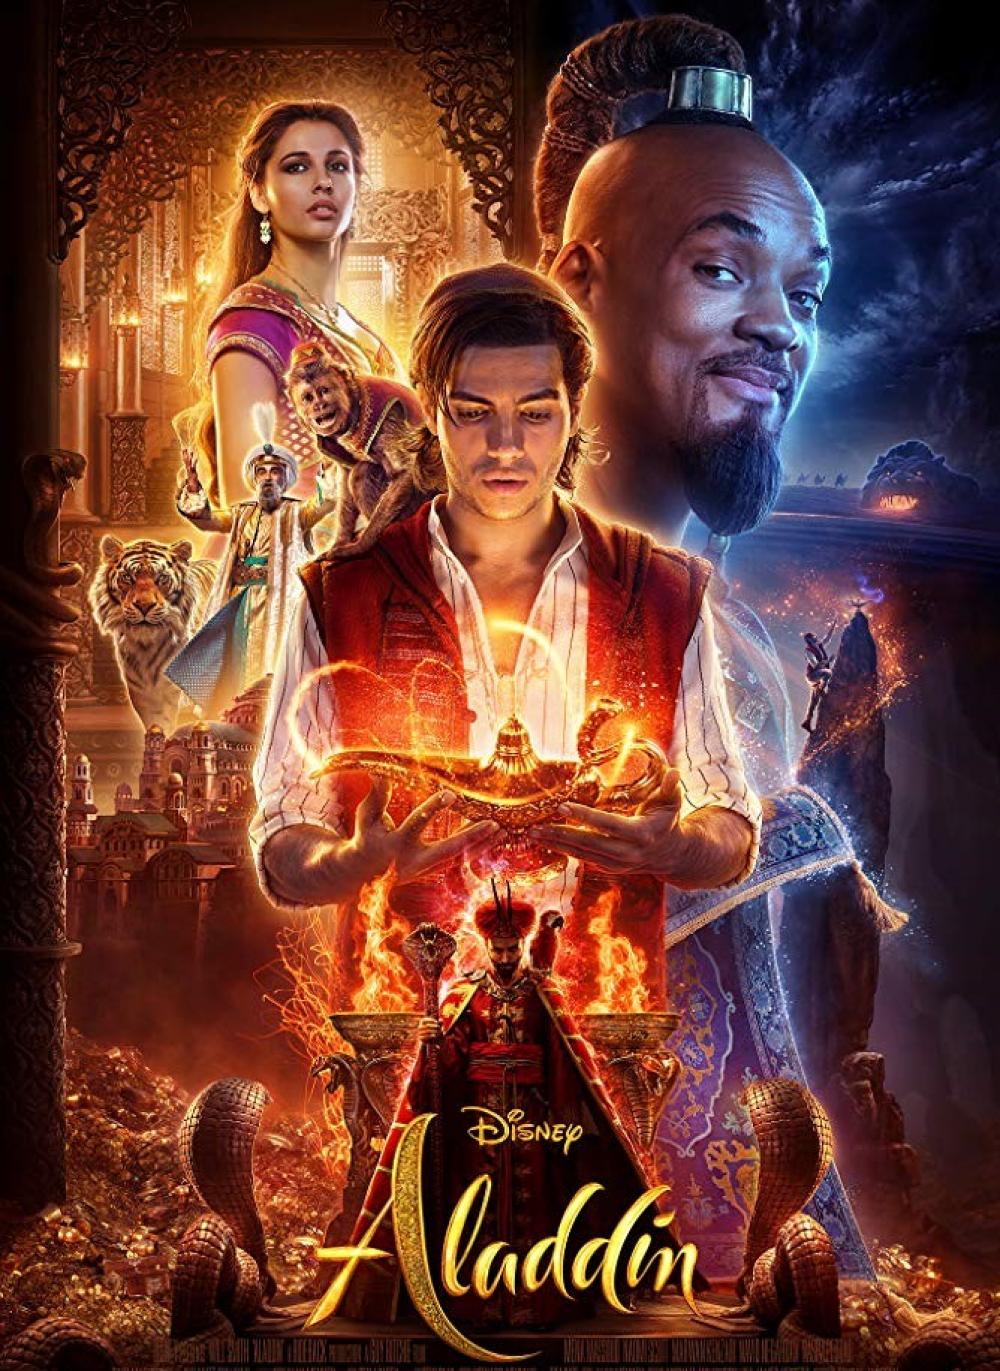 Movie night in the space - Aladdin